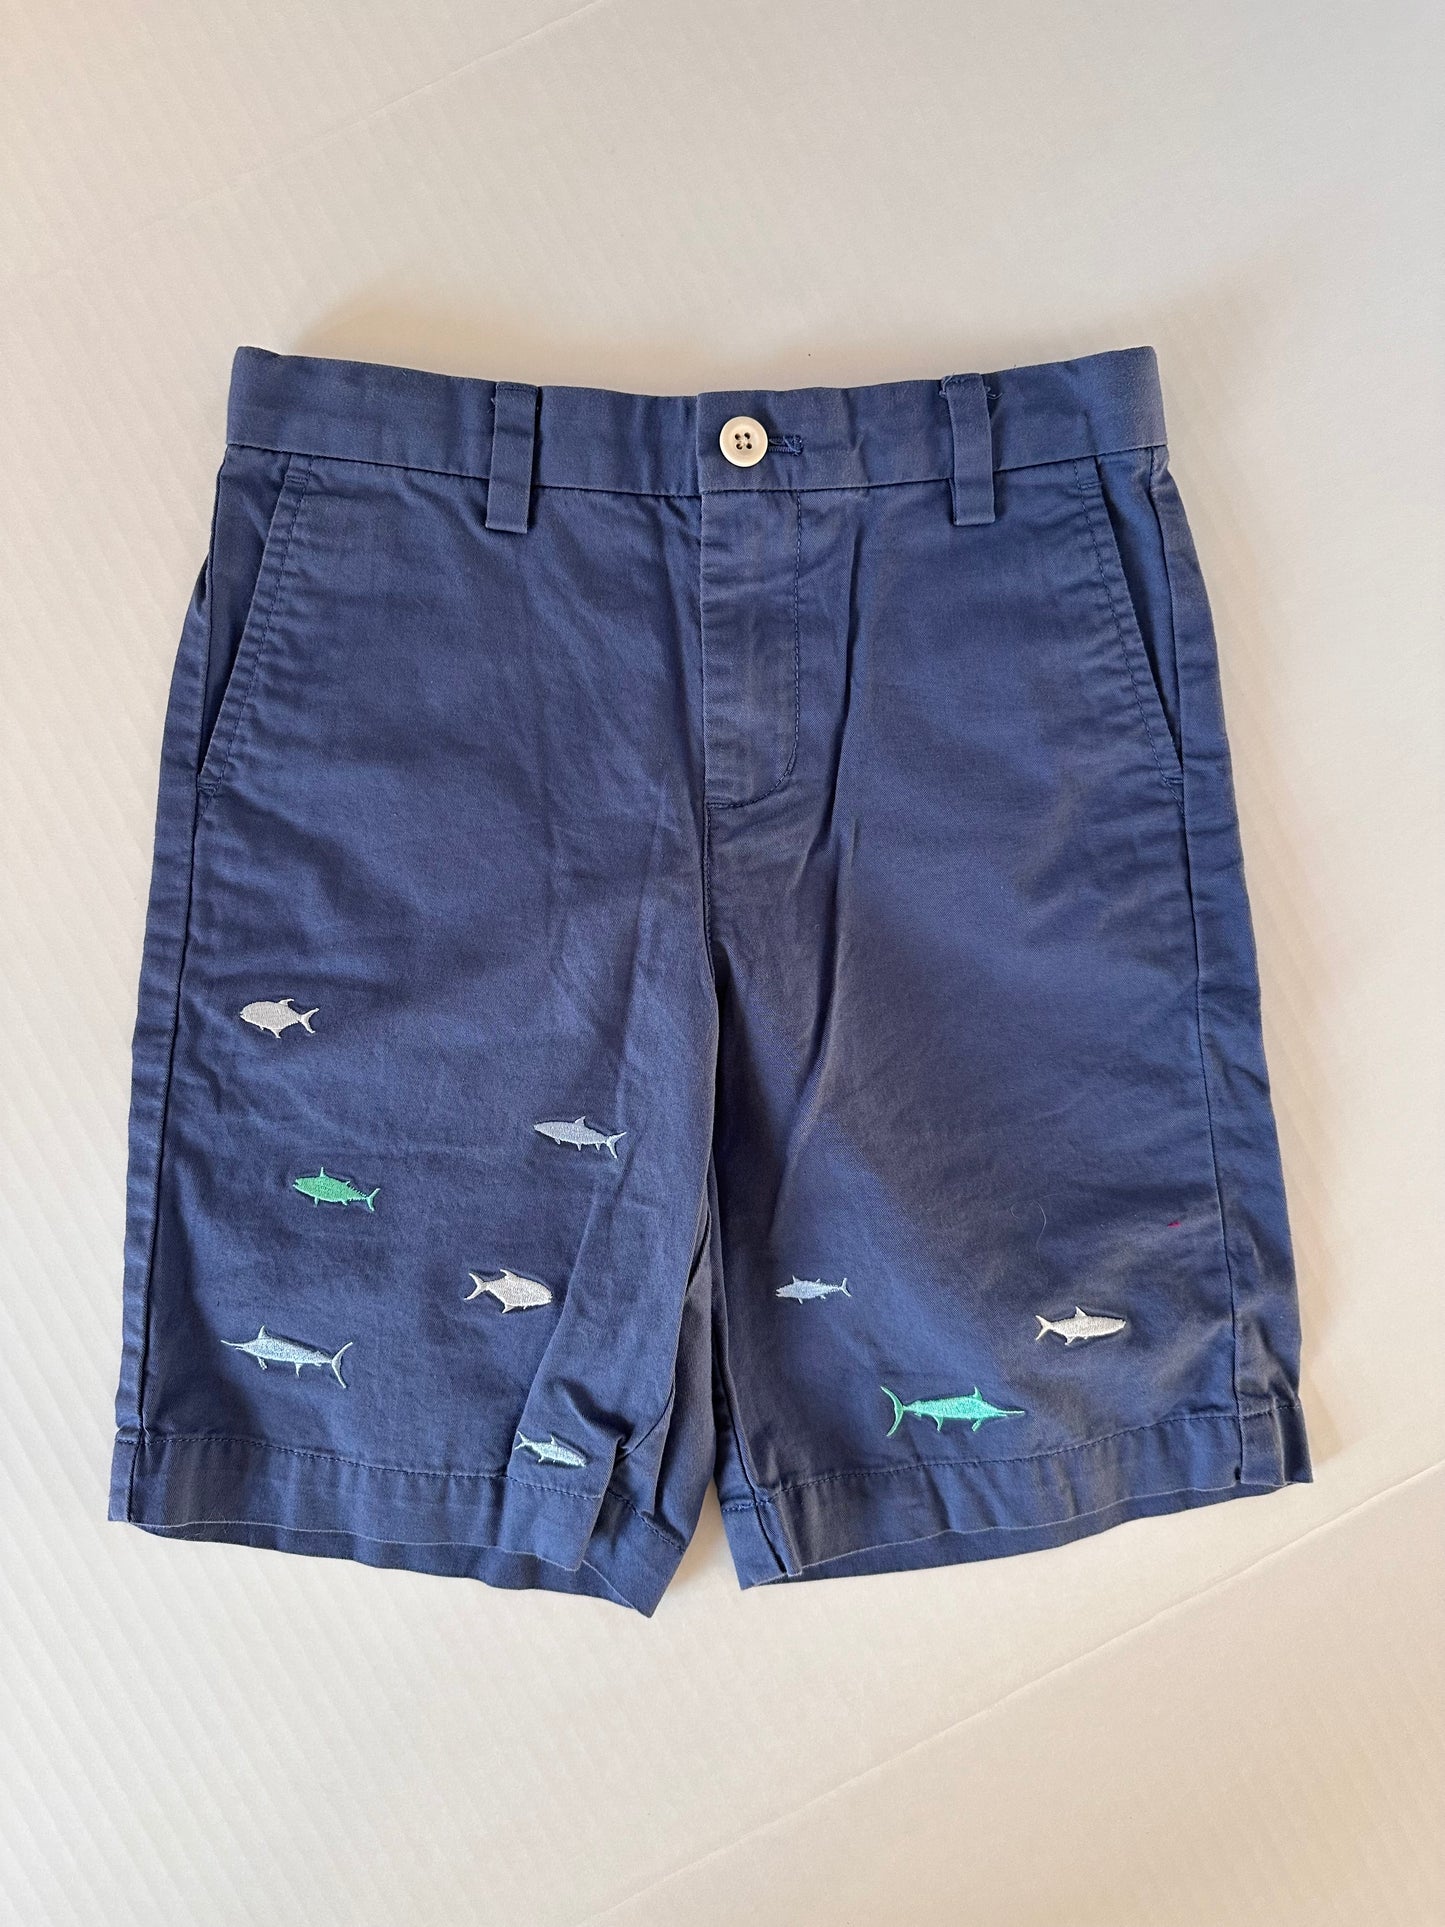 Vineyard Vines Embroidered school of fish navy boys size 7, adjustable waist